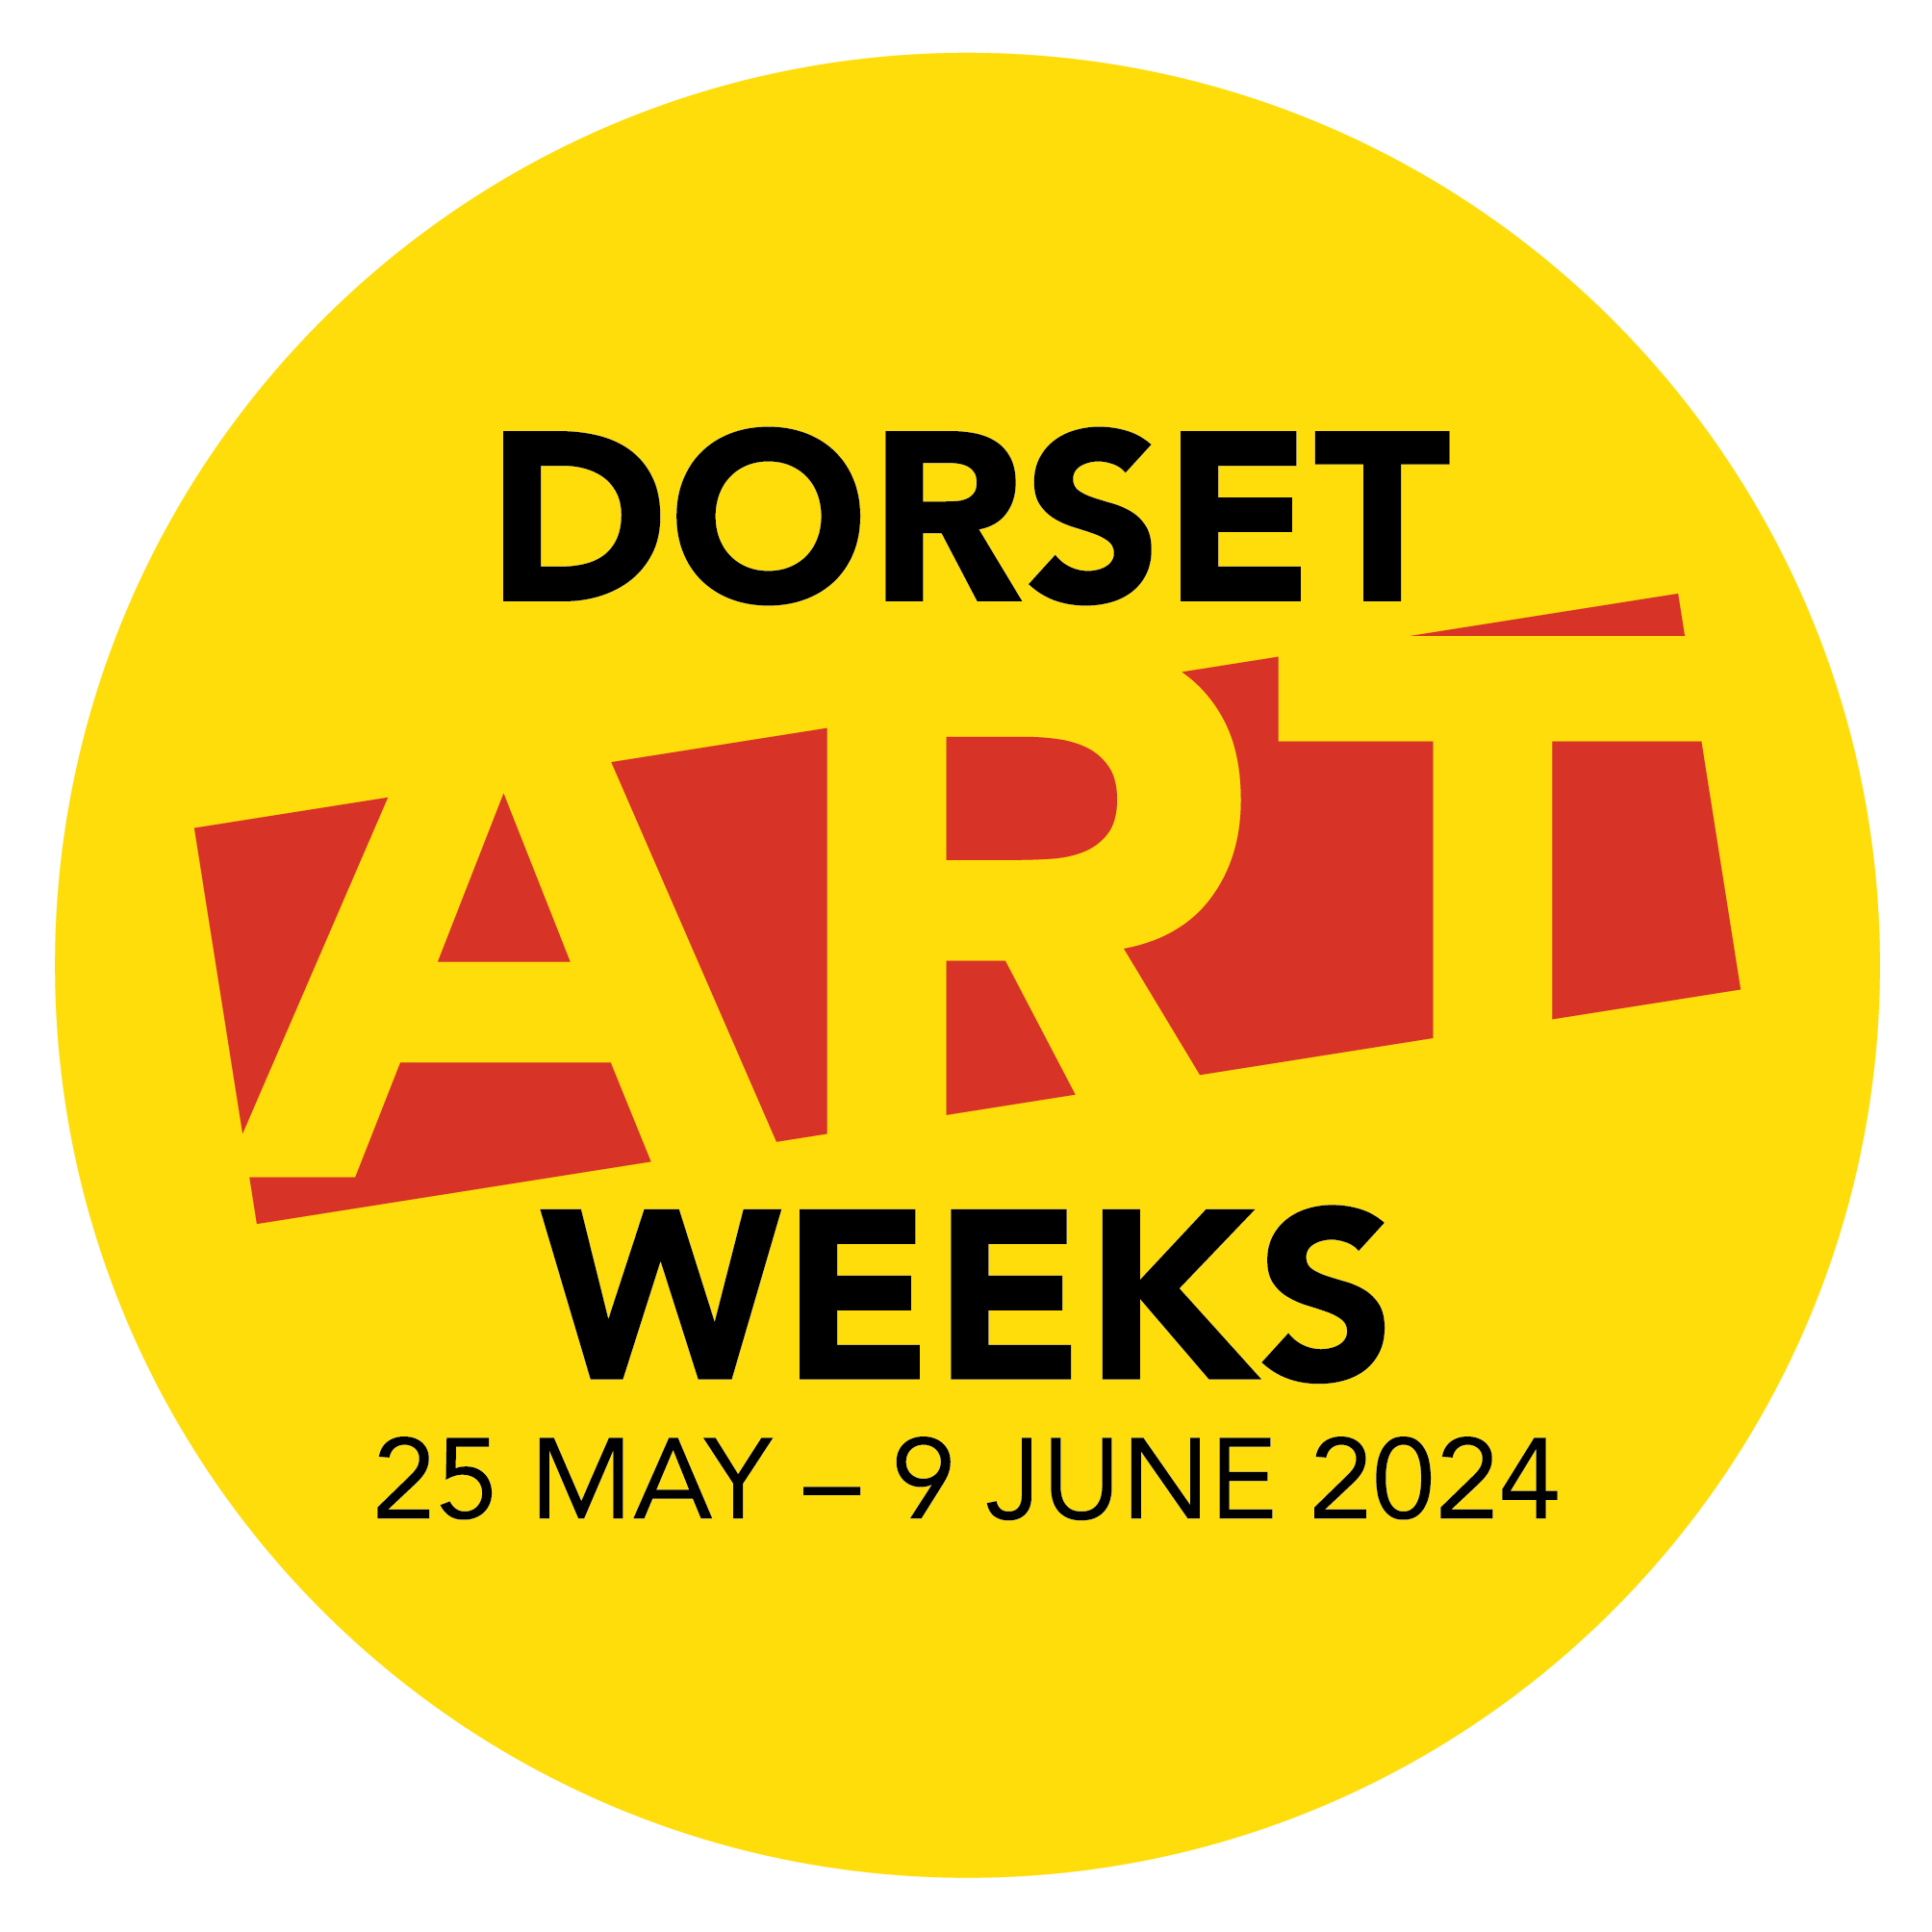 Dorset art weeks logo 2024